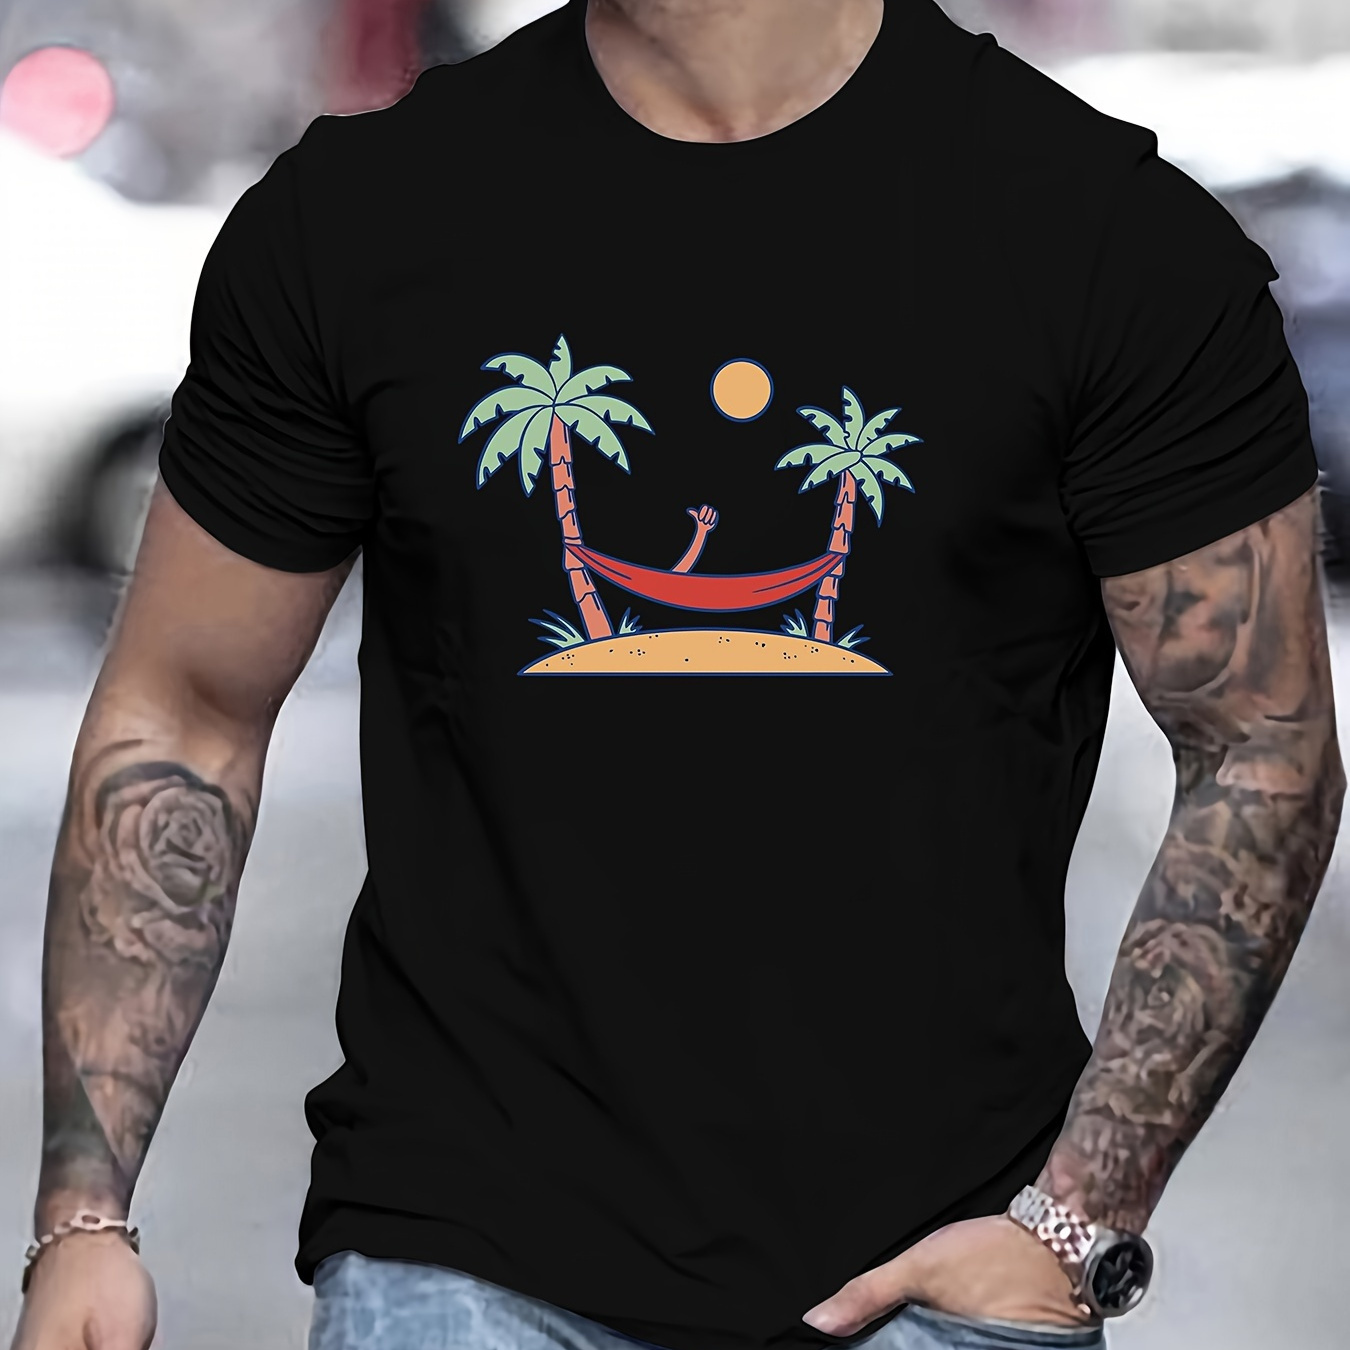 

Cartoon Beach Coconut Tree Thumb Pattern Print Men's T-shirt Short Sleeve Crew Neck Tops Cotton Comfortable Breathable Spring Summer Clothing For Men